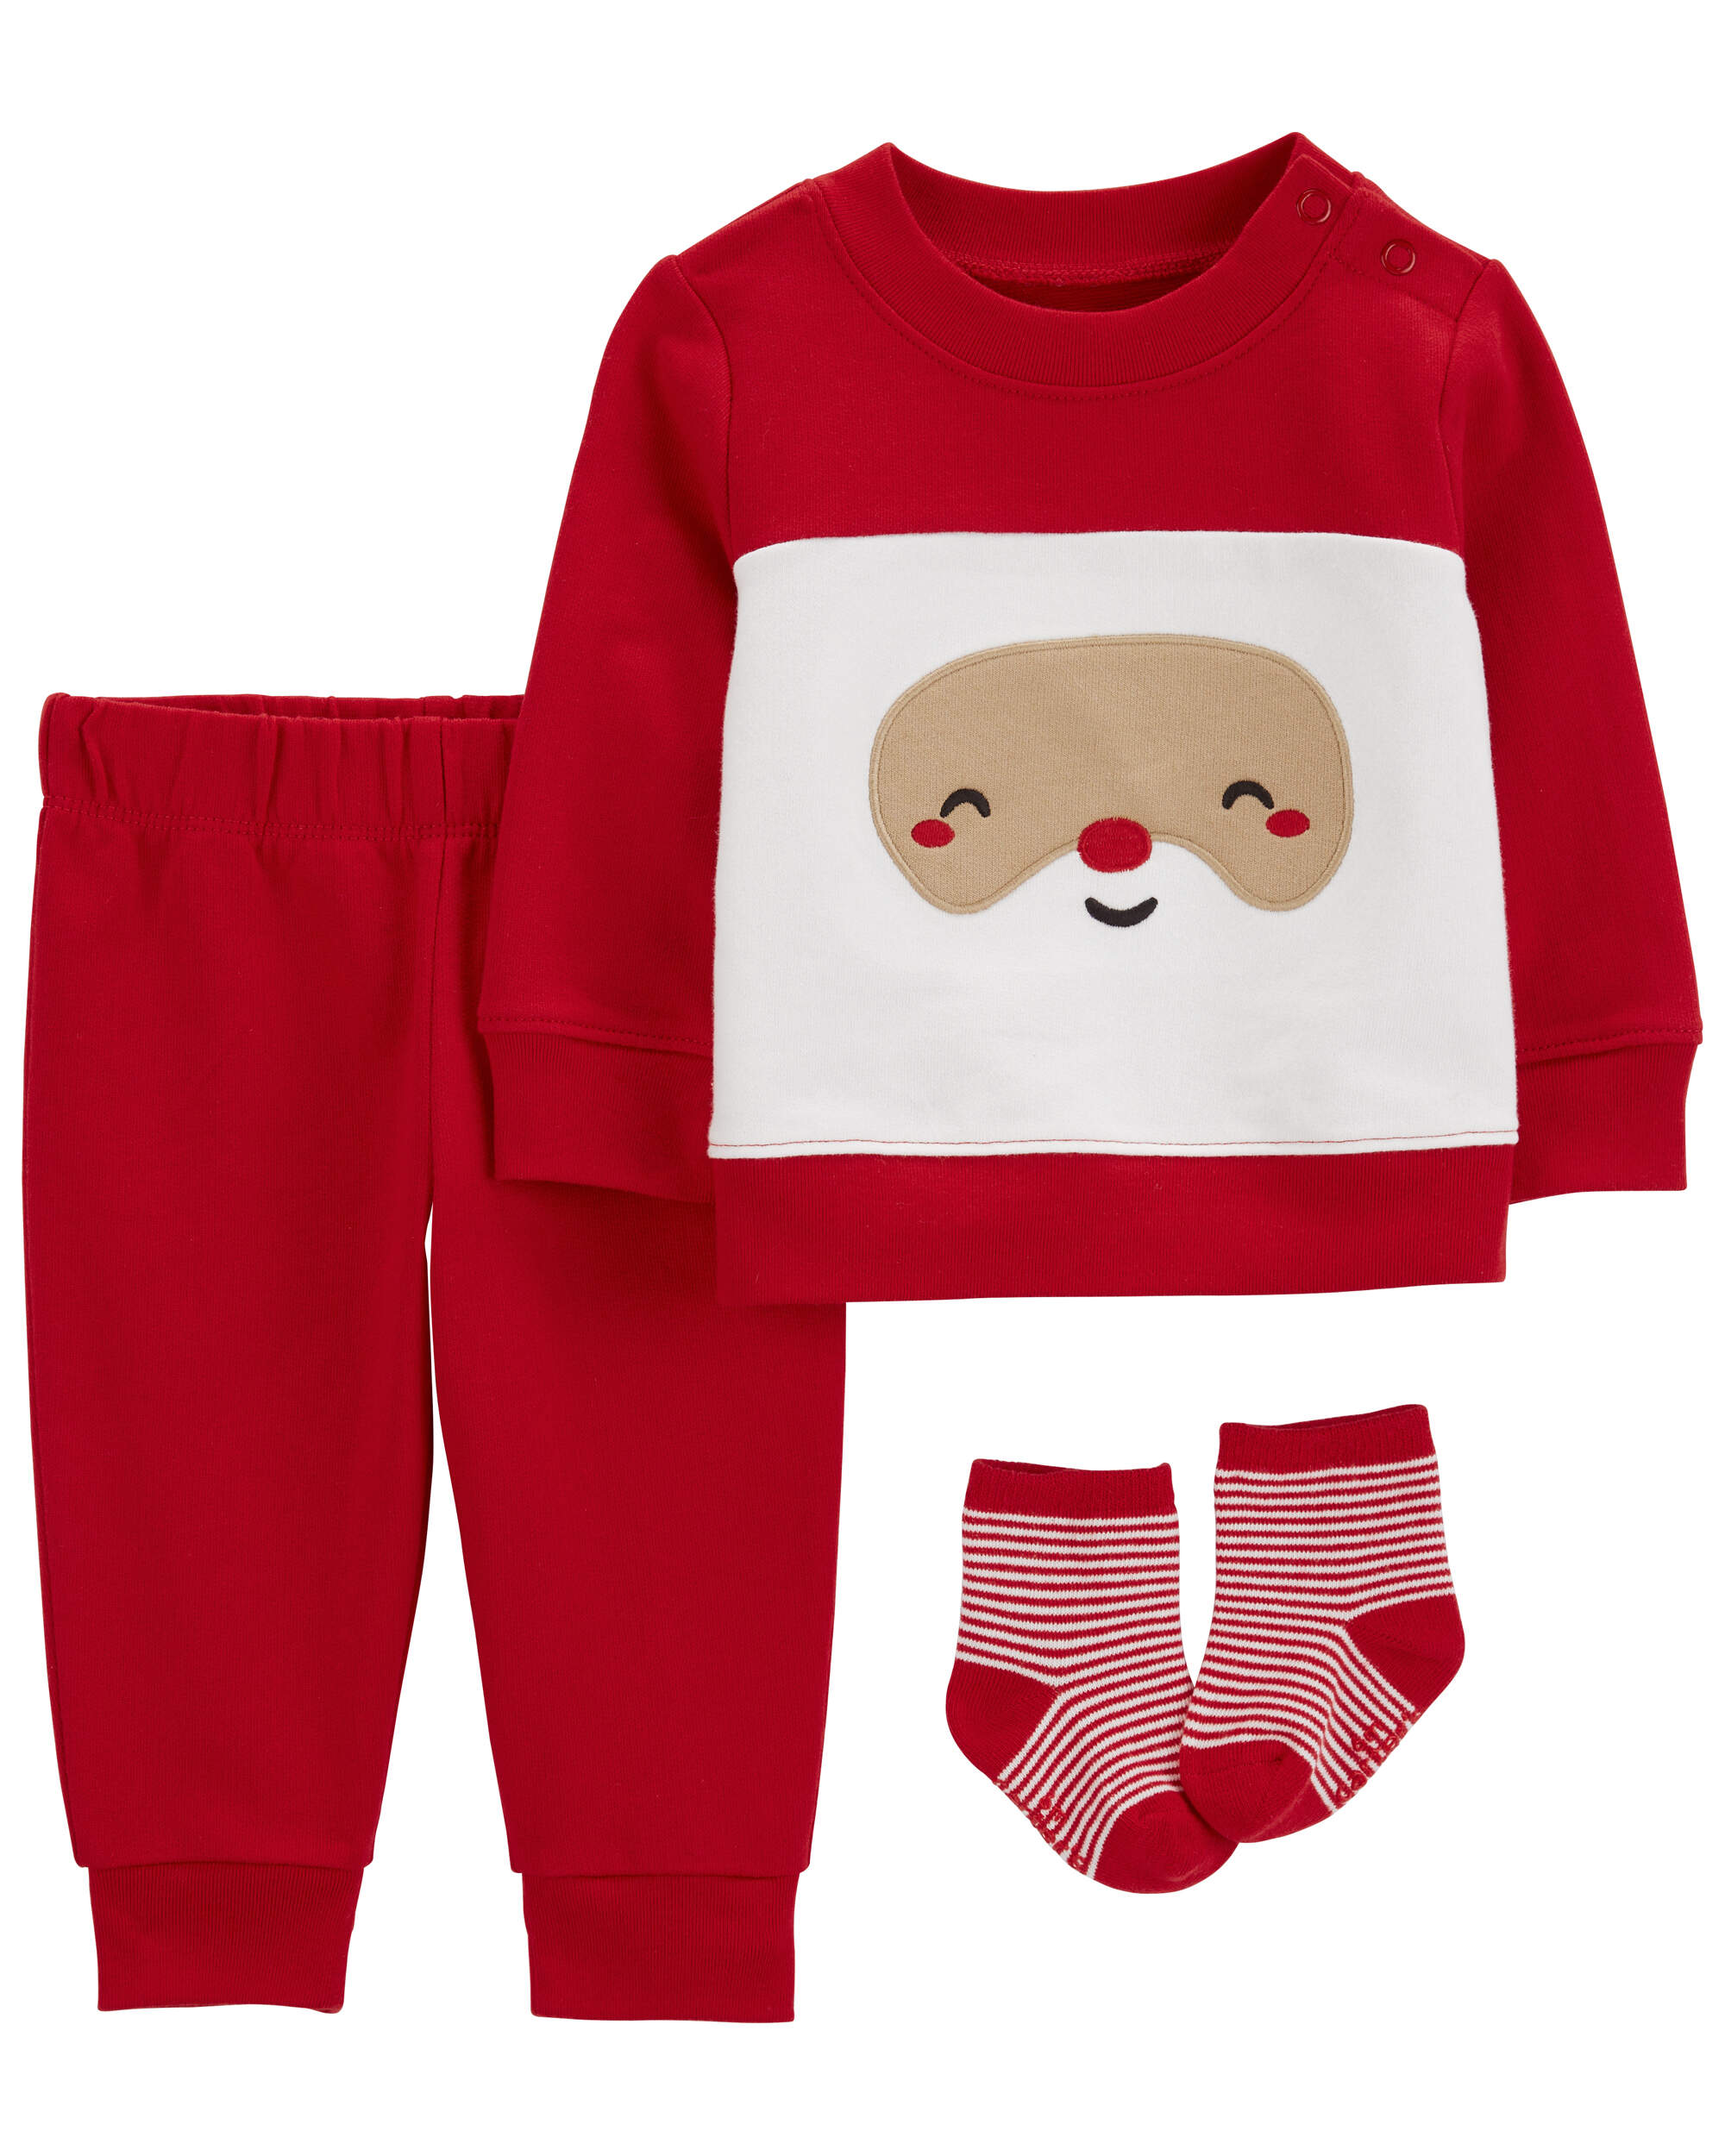 Baby 3-Piece Santa Claus Outfit Set